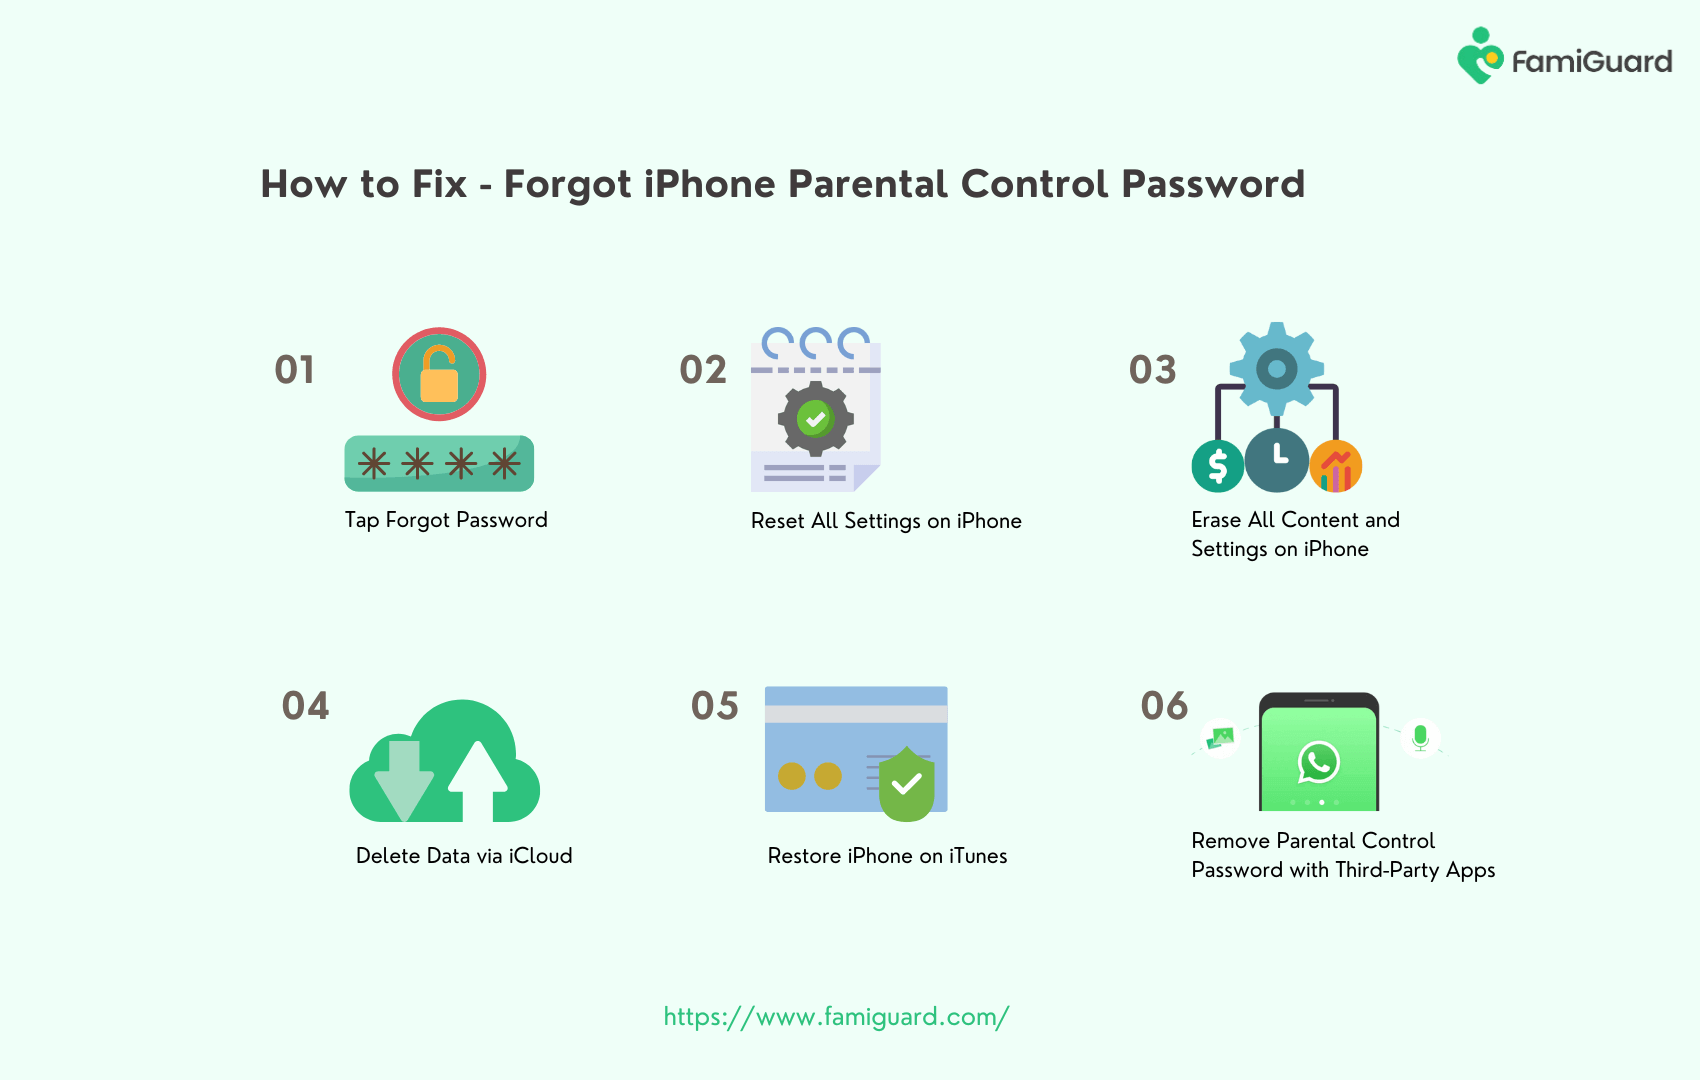 How to Fix Forgot iPhone Parental Control
Password